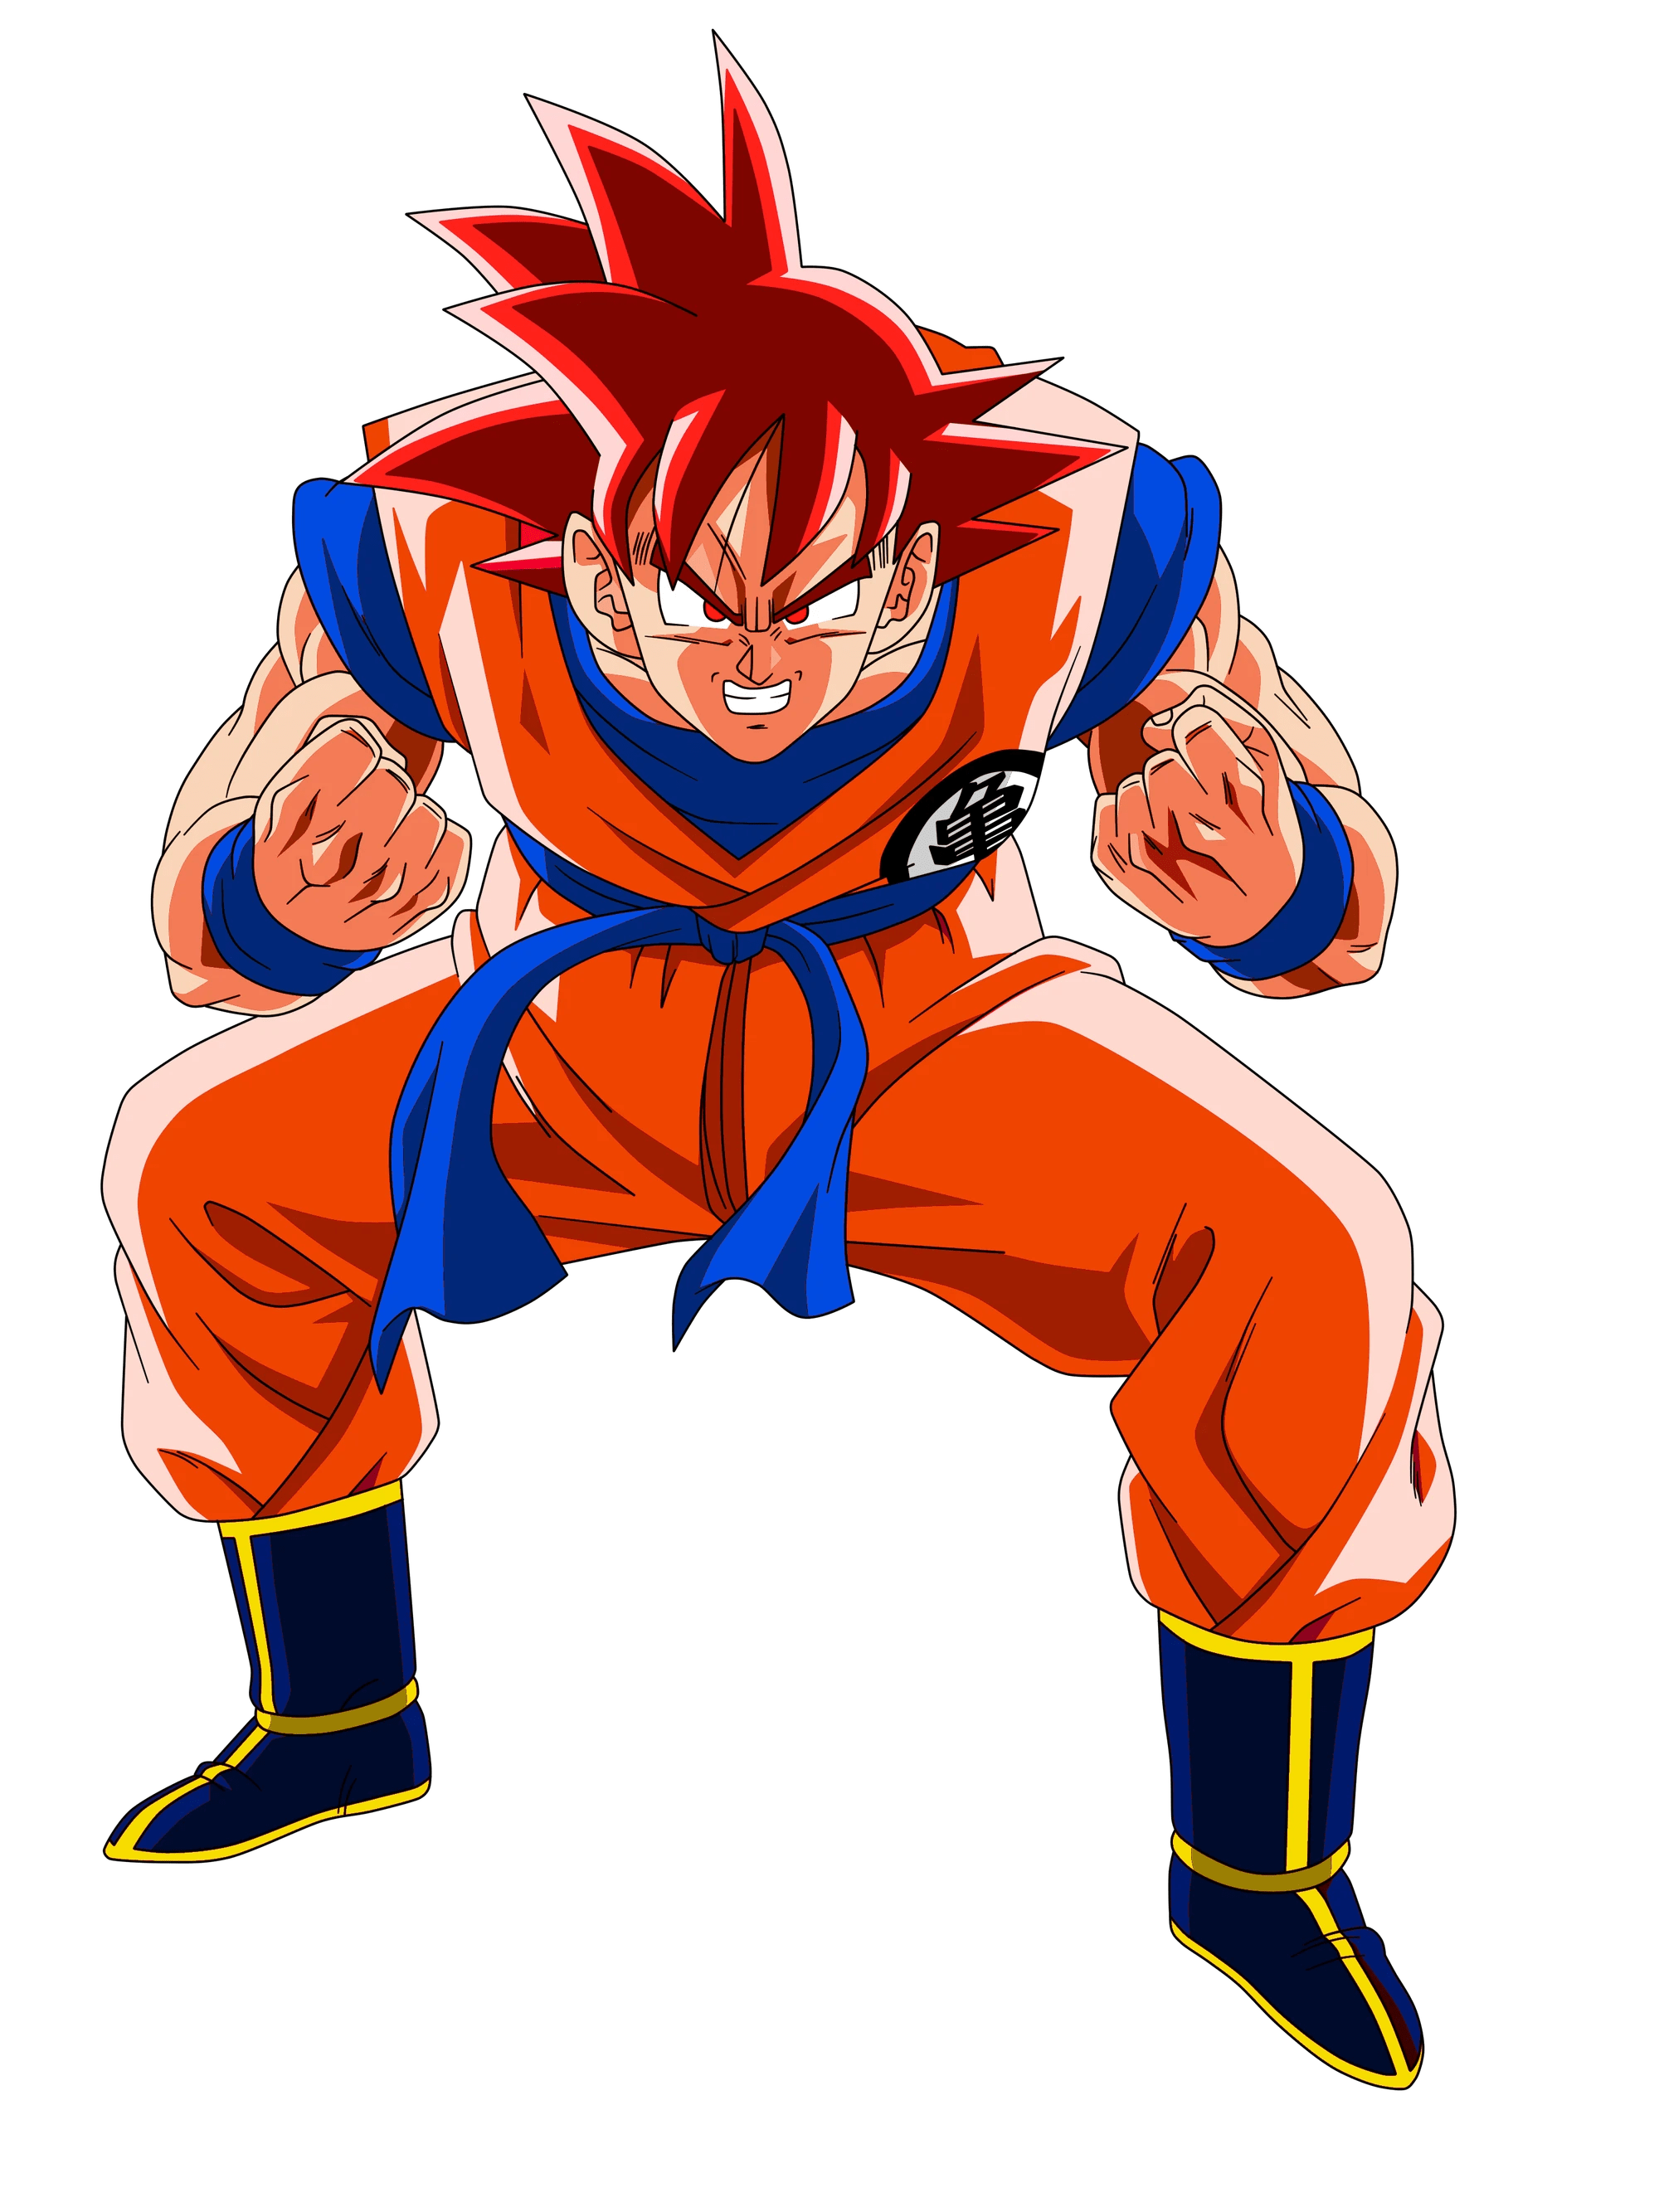 Mui Goku PNG Image File